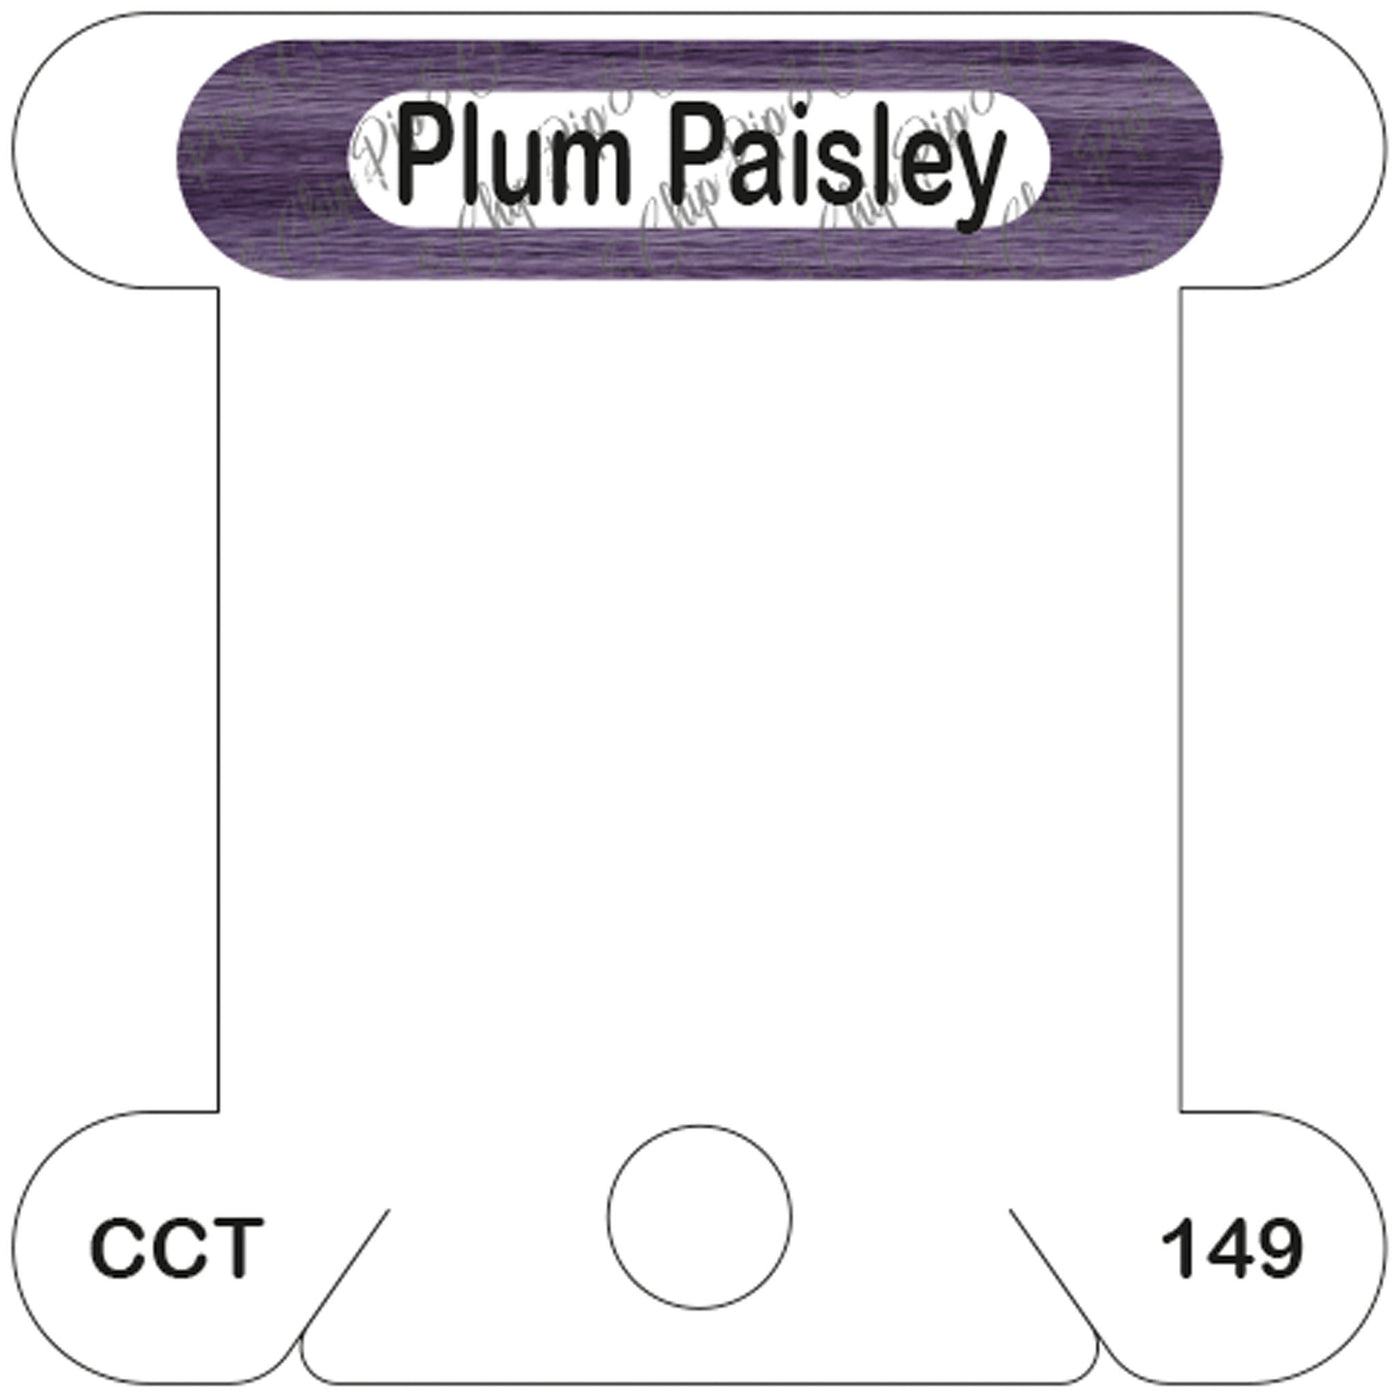 Classic Colorworks Plum Paisley acrylic bobbin